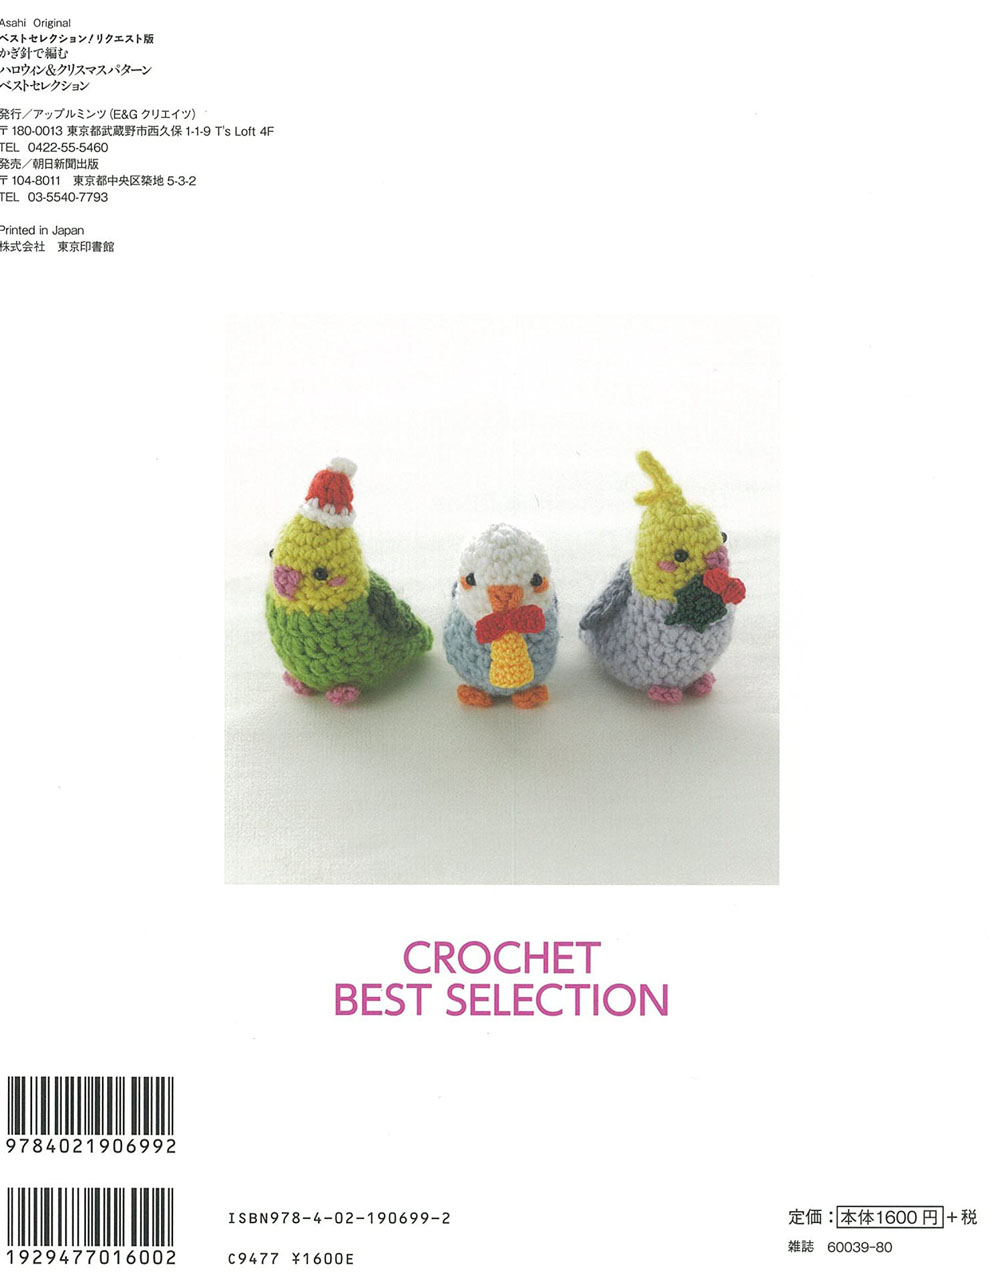 Crochet Halloween & Christmas pattern Best Selection